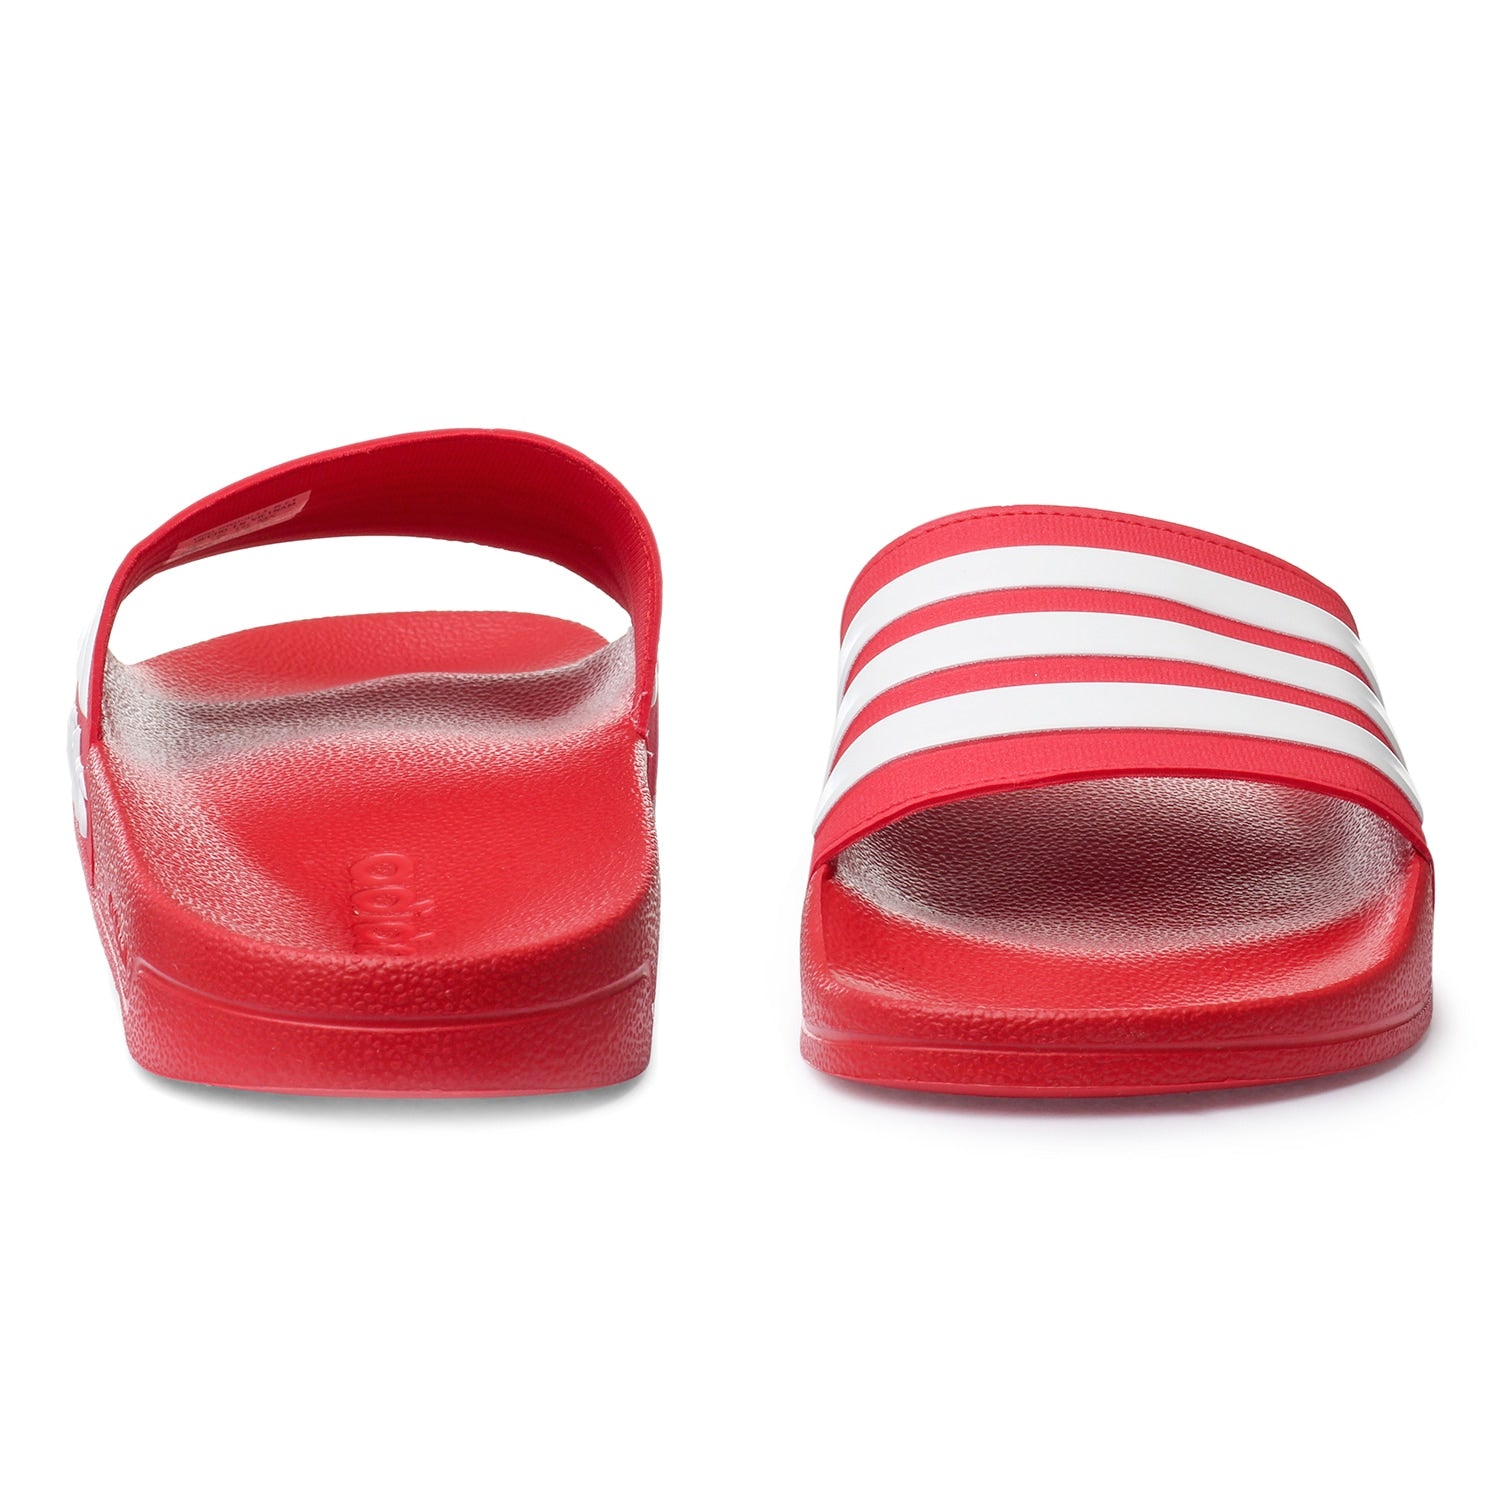 Sandalias Adilette Shower - AQ1705 - Rojo - Unisex | Shoelander.com - Footwear Retail